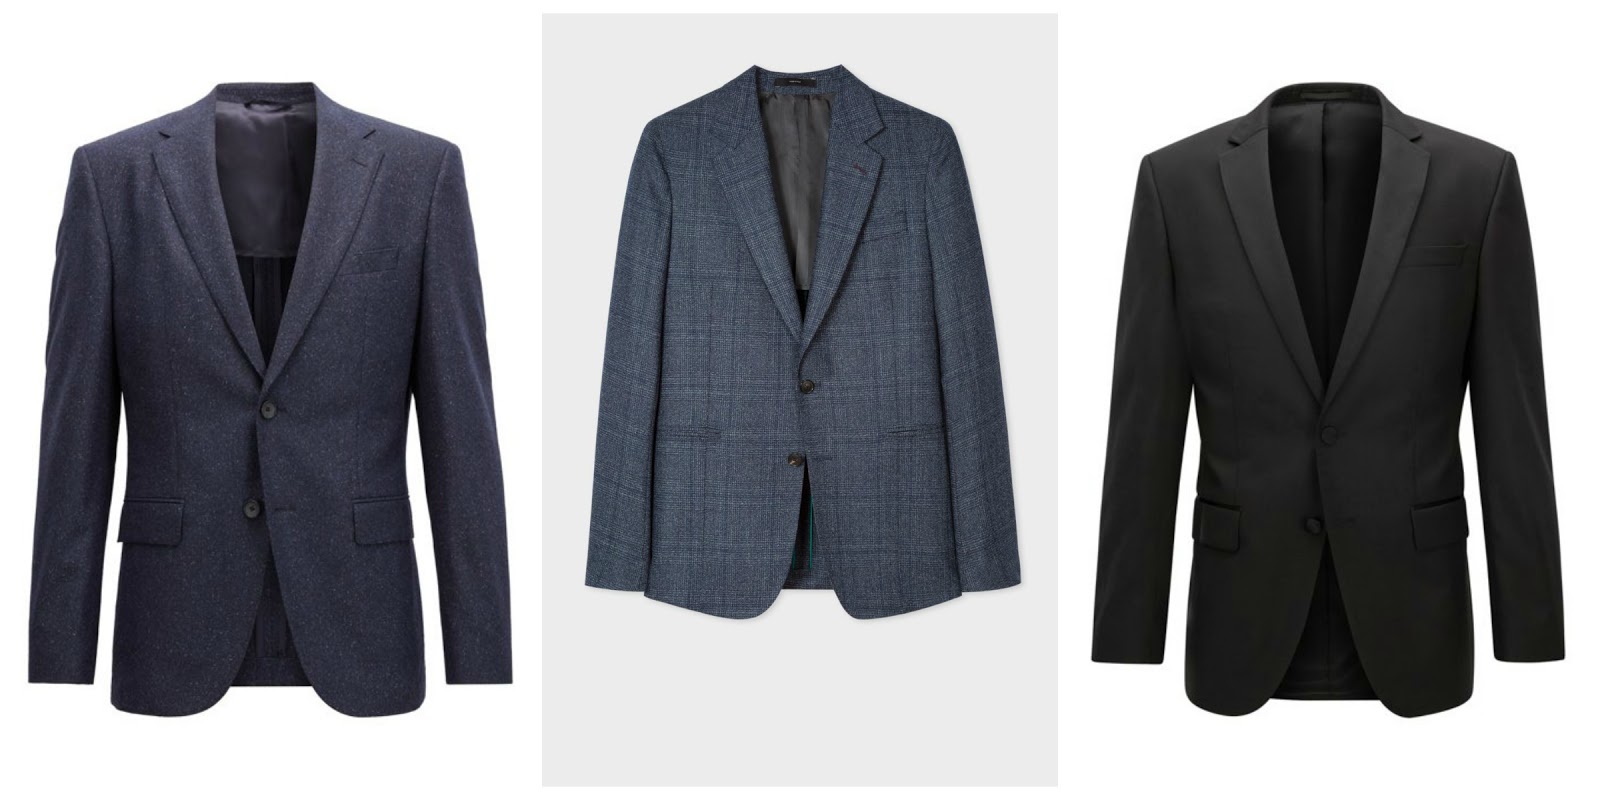 Beautykinguk: Matching a shirt and blazer: a man’s guide